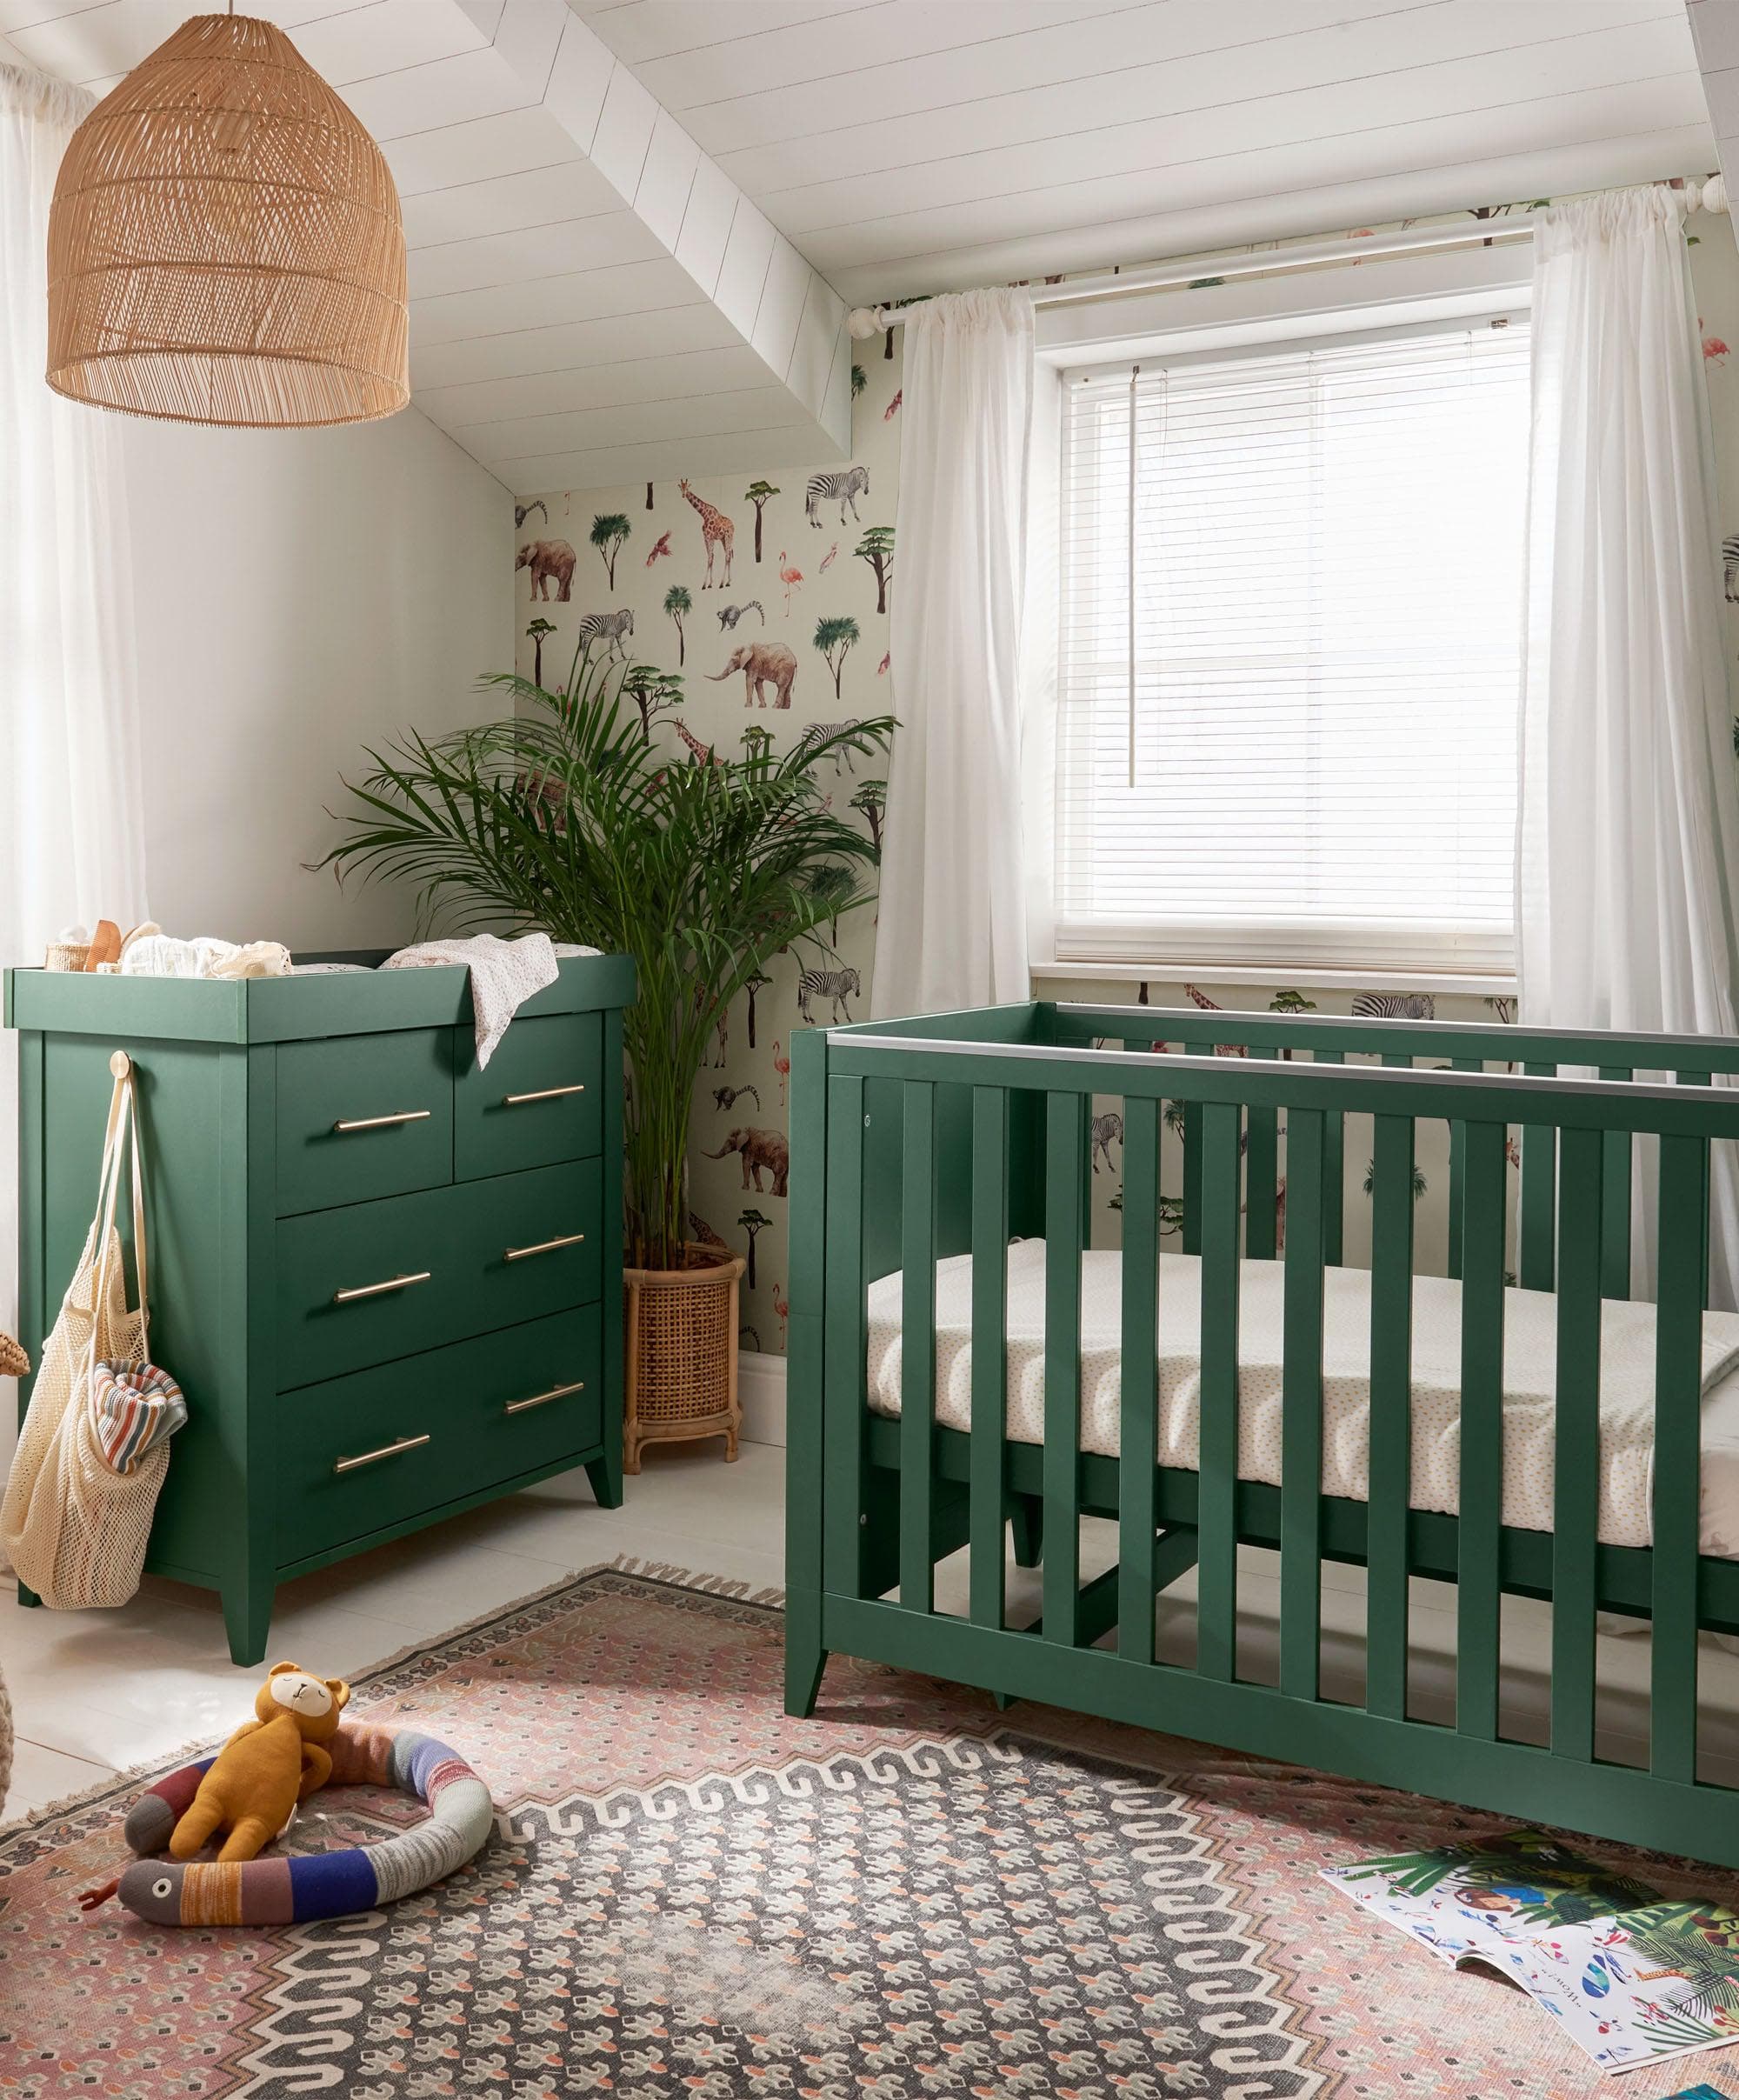 Chicco Next 2 Me Dream - Luna  Nursery Furniture – Mamas & Papas UK